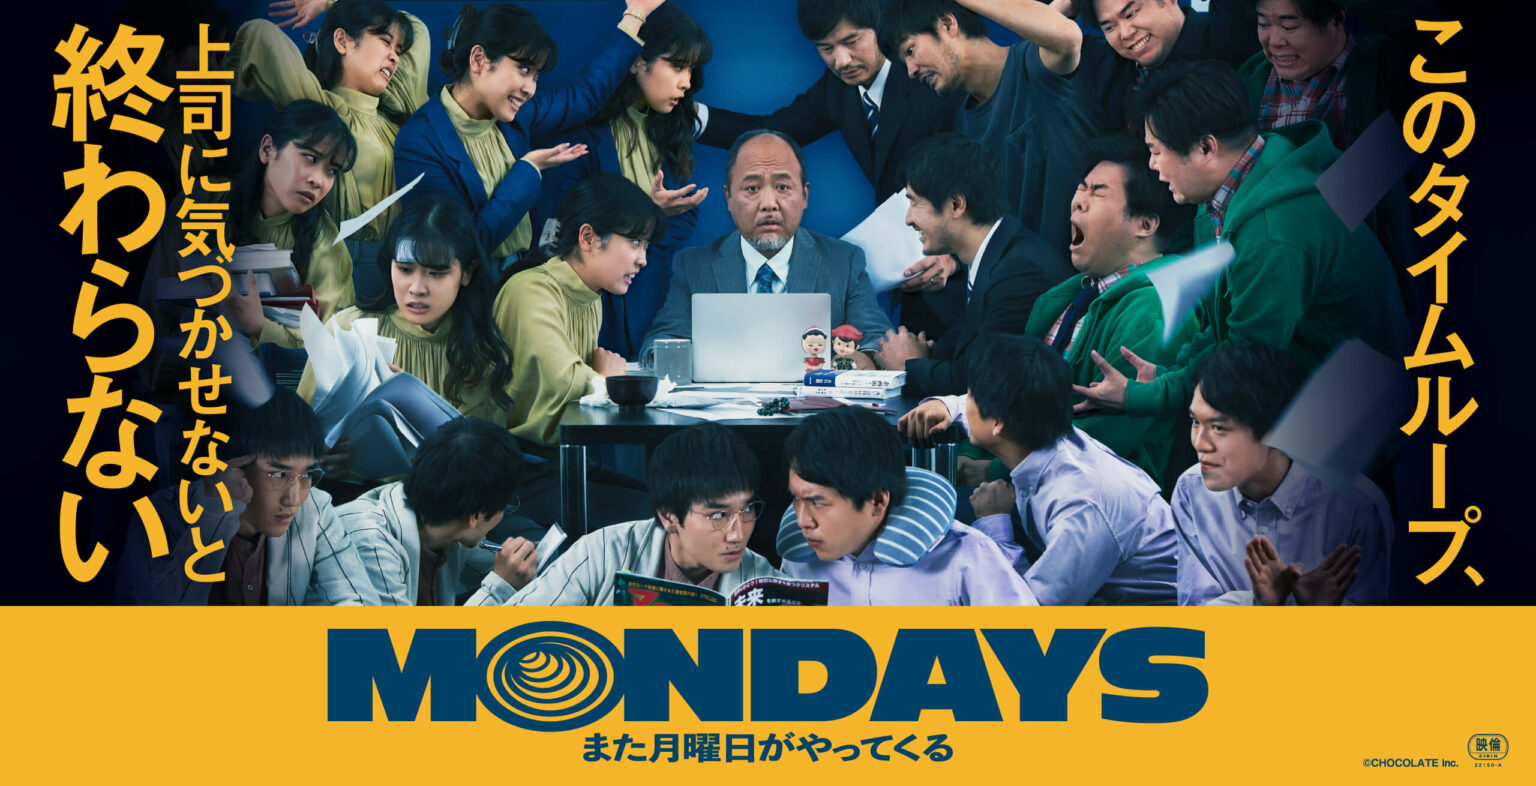 Film Review: Mondays: See You “This” Week! (2022) by Ryo Takebayashi